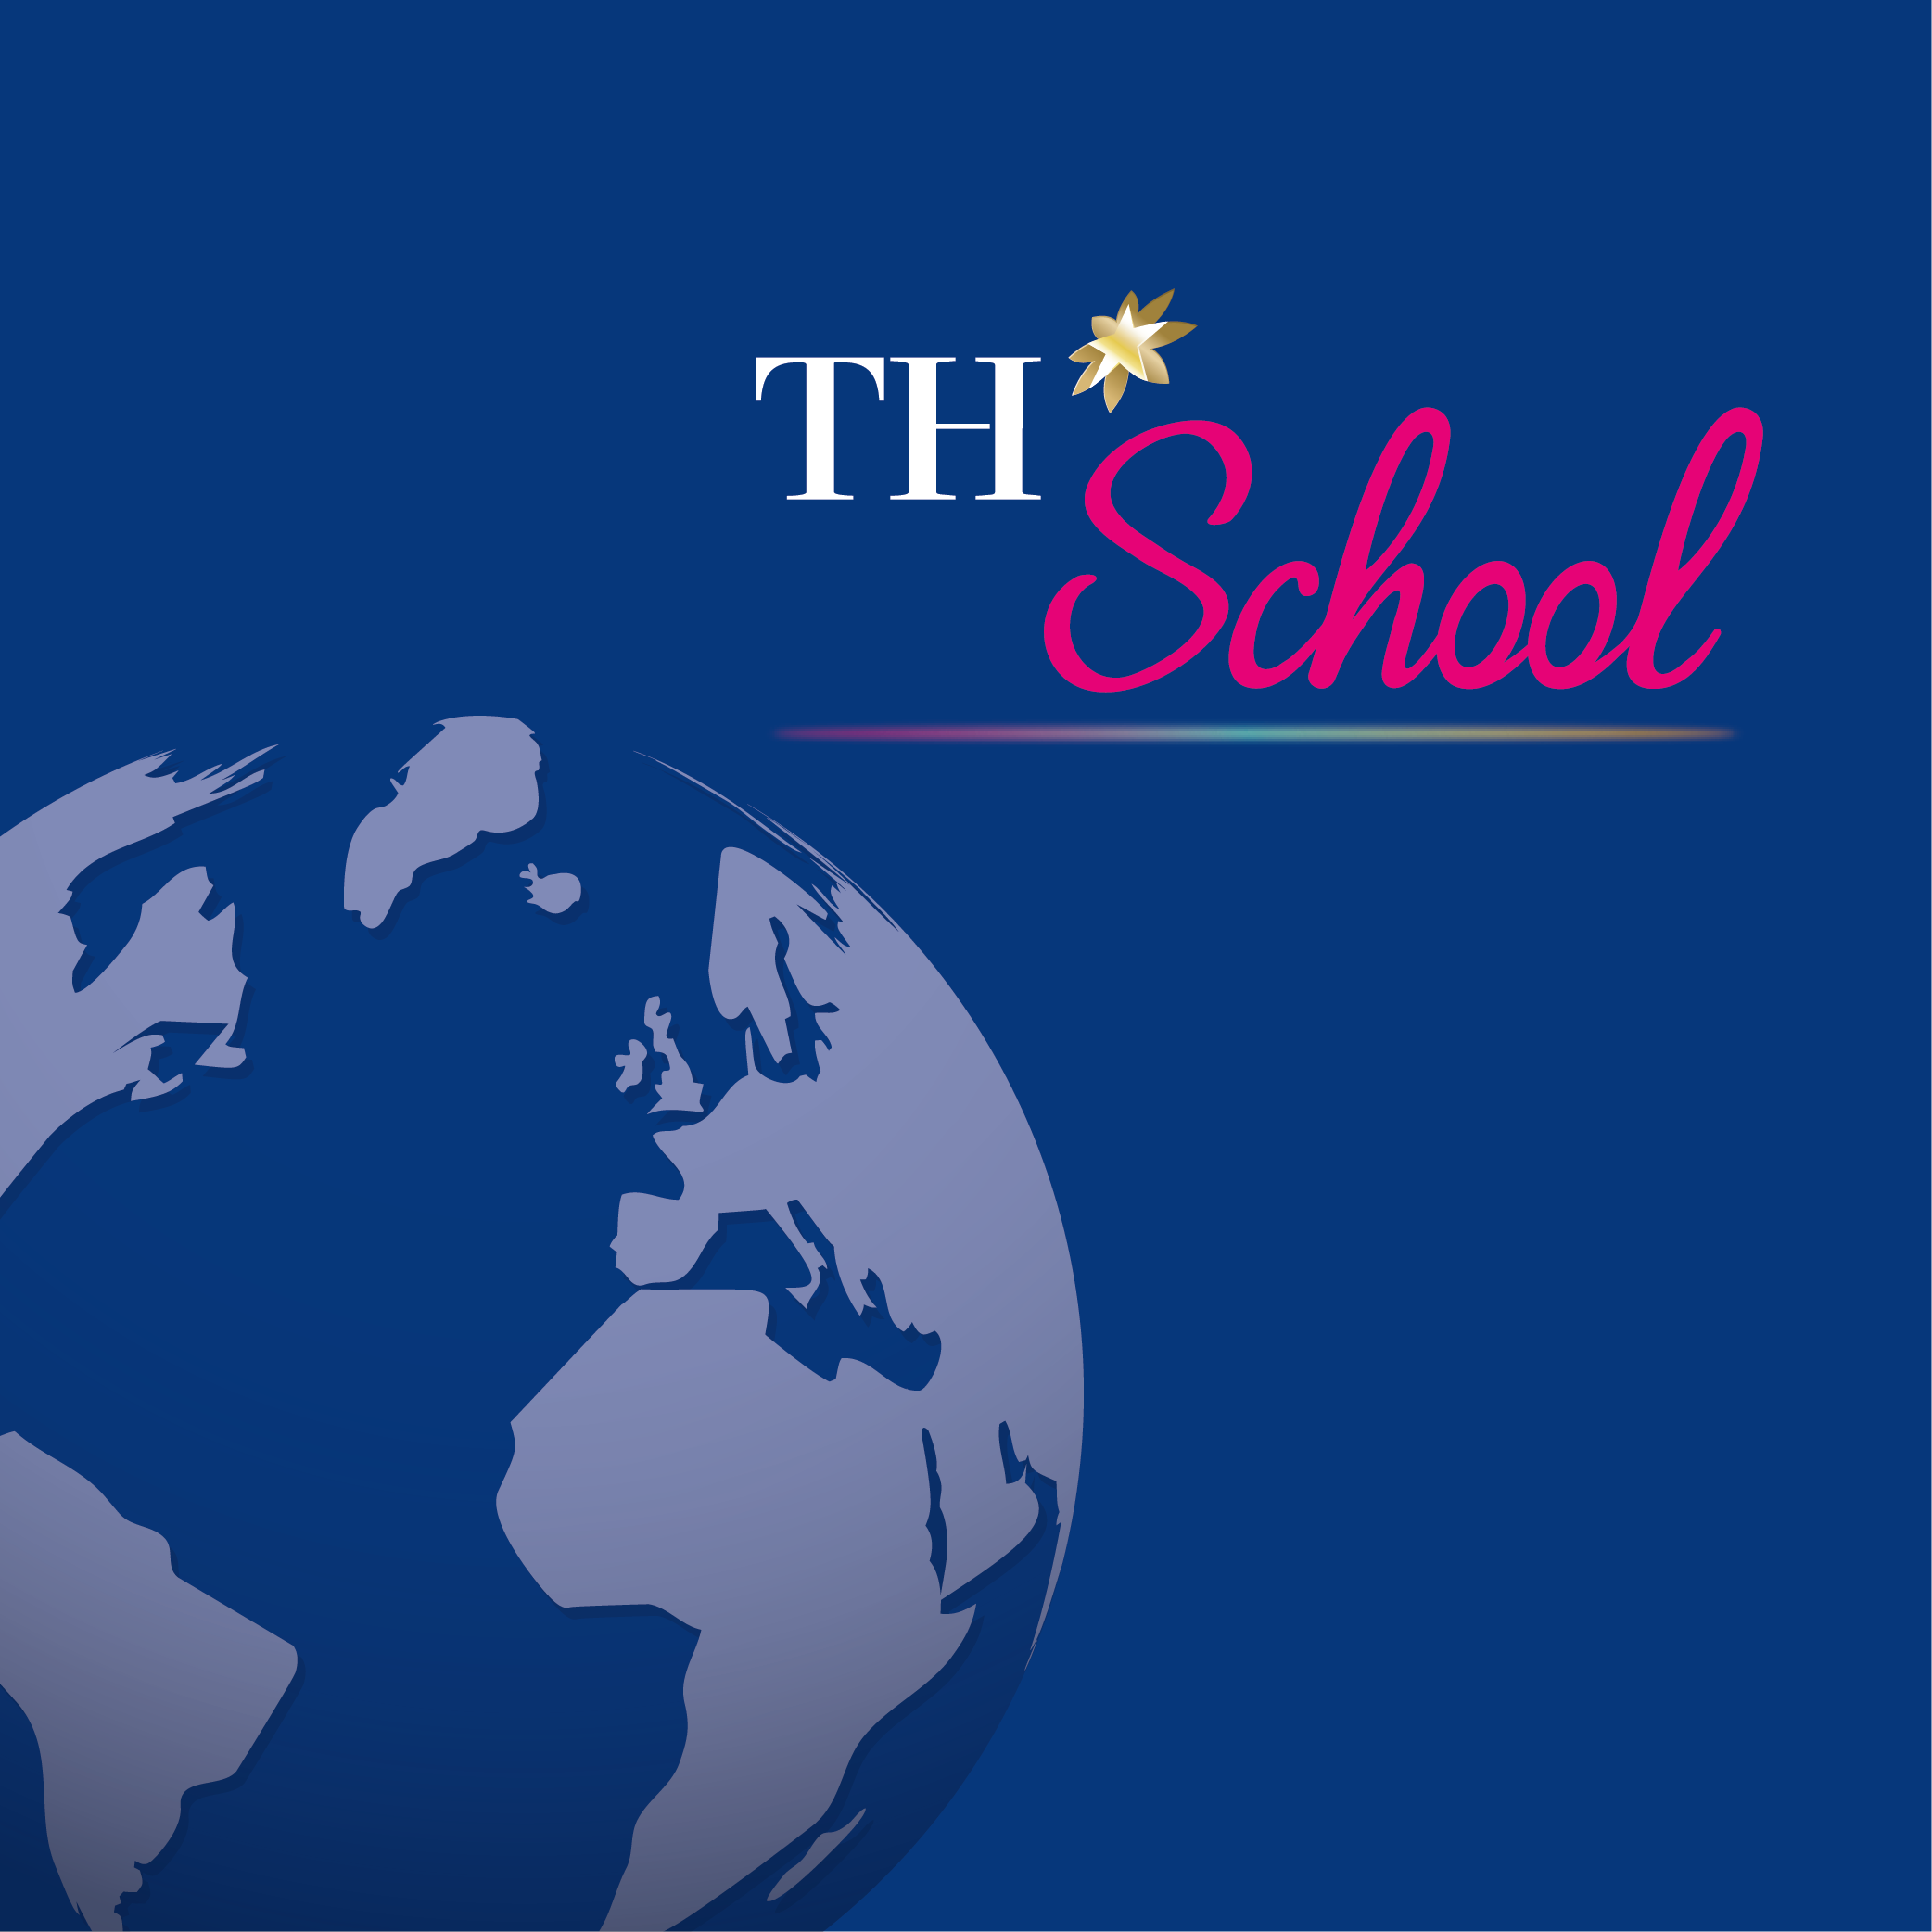 TH School’s students recieve scholarships worldwide